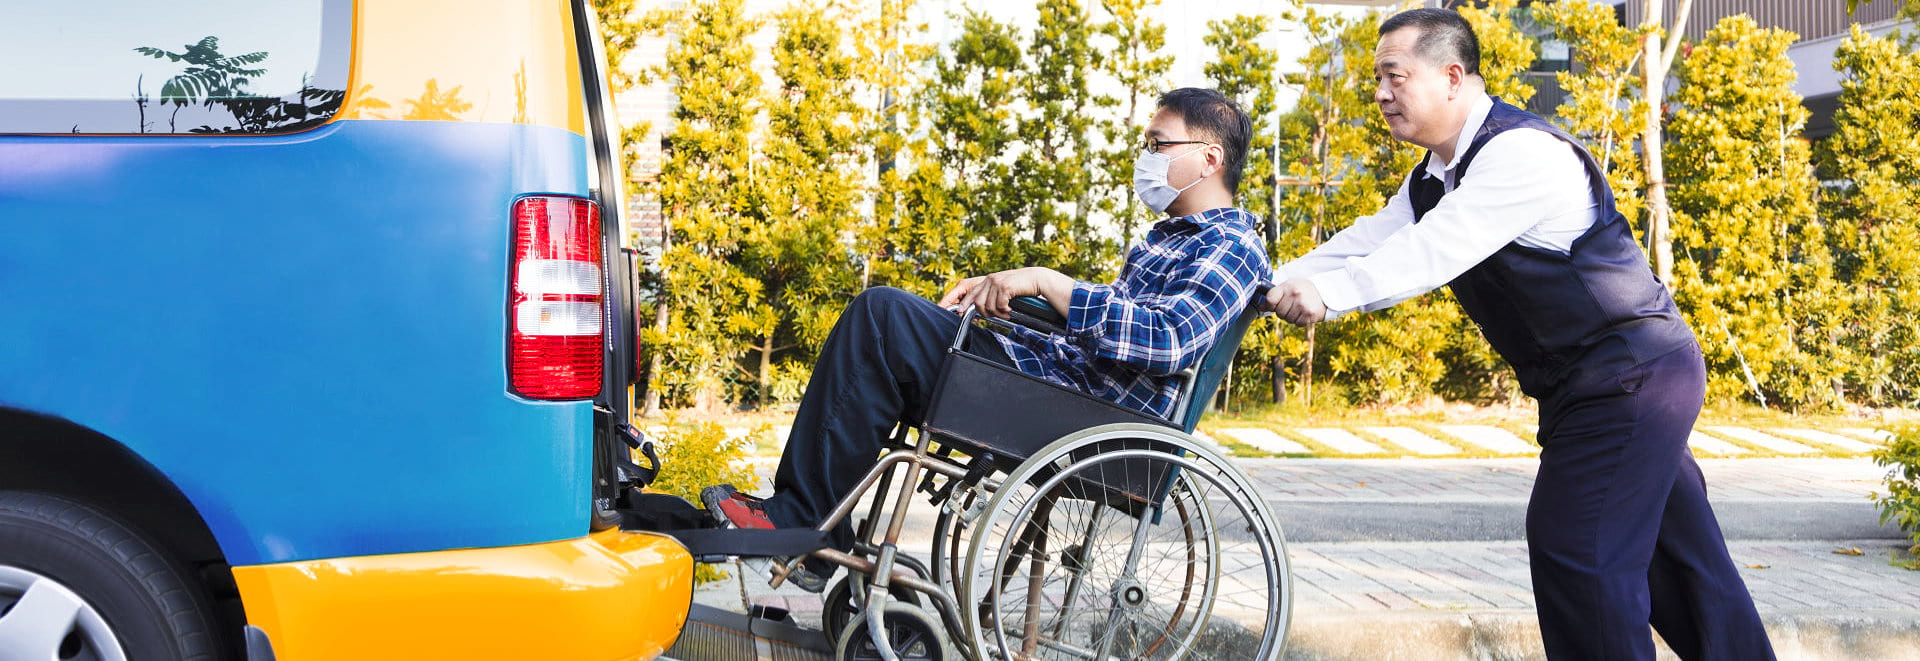 driver helping man in a wheelchair